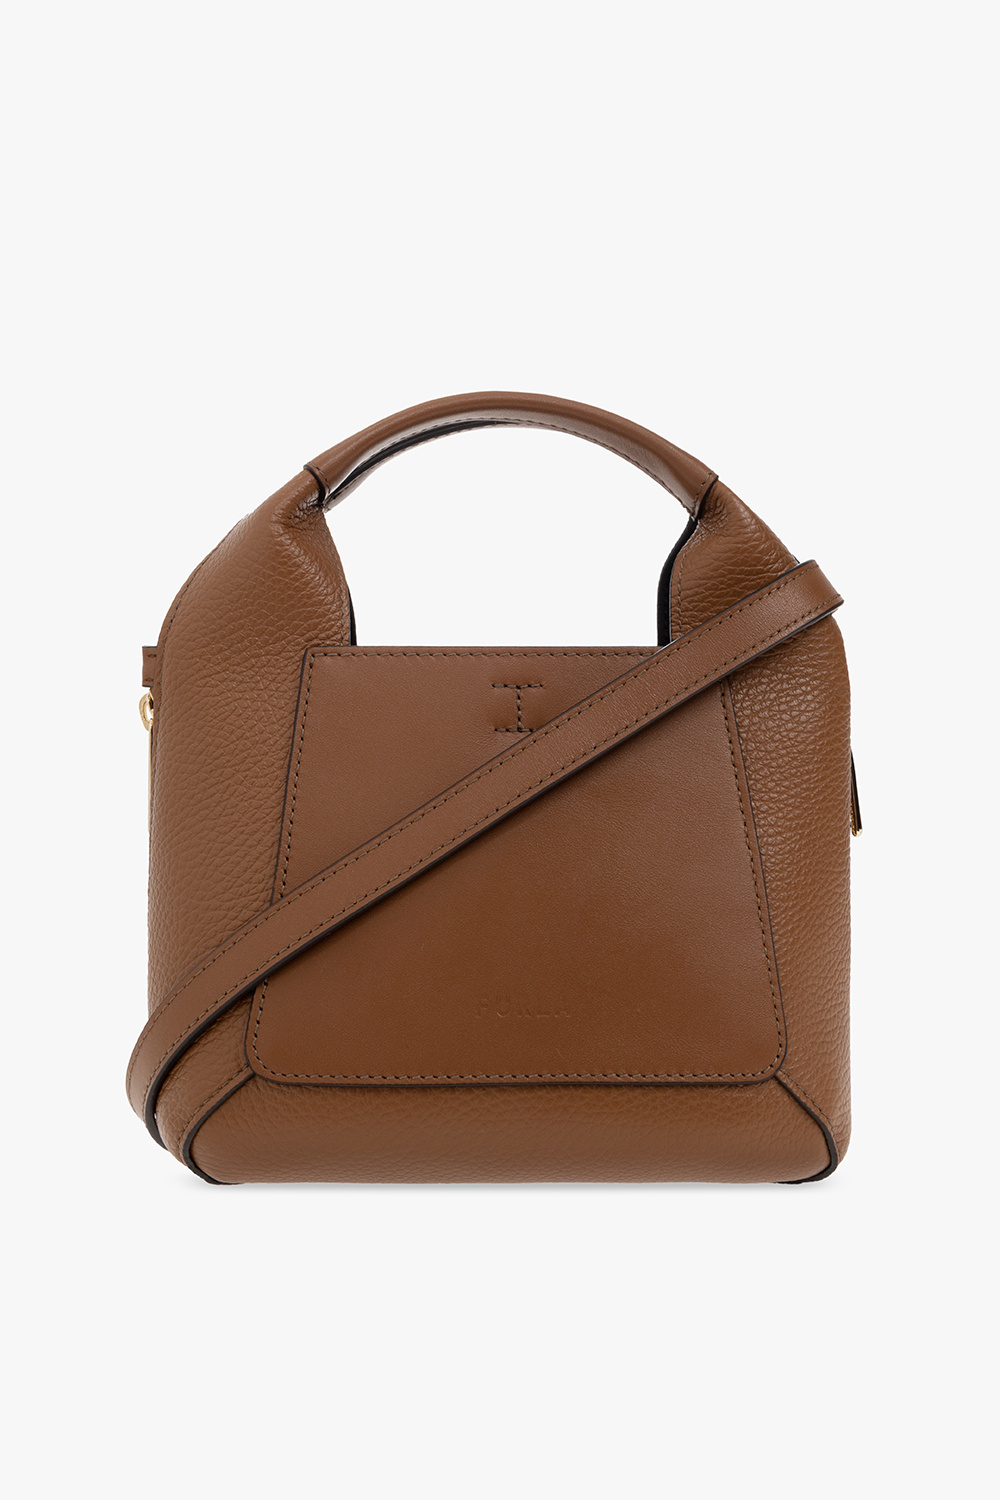 Furla 'Gilda Mini' shoulder bag, Women's Bags